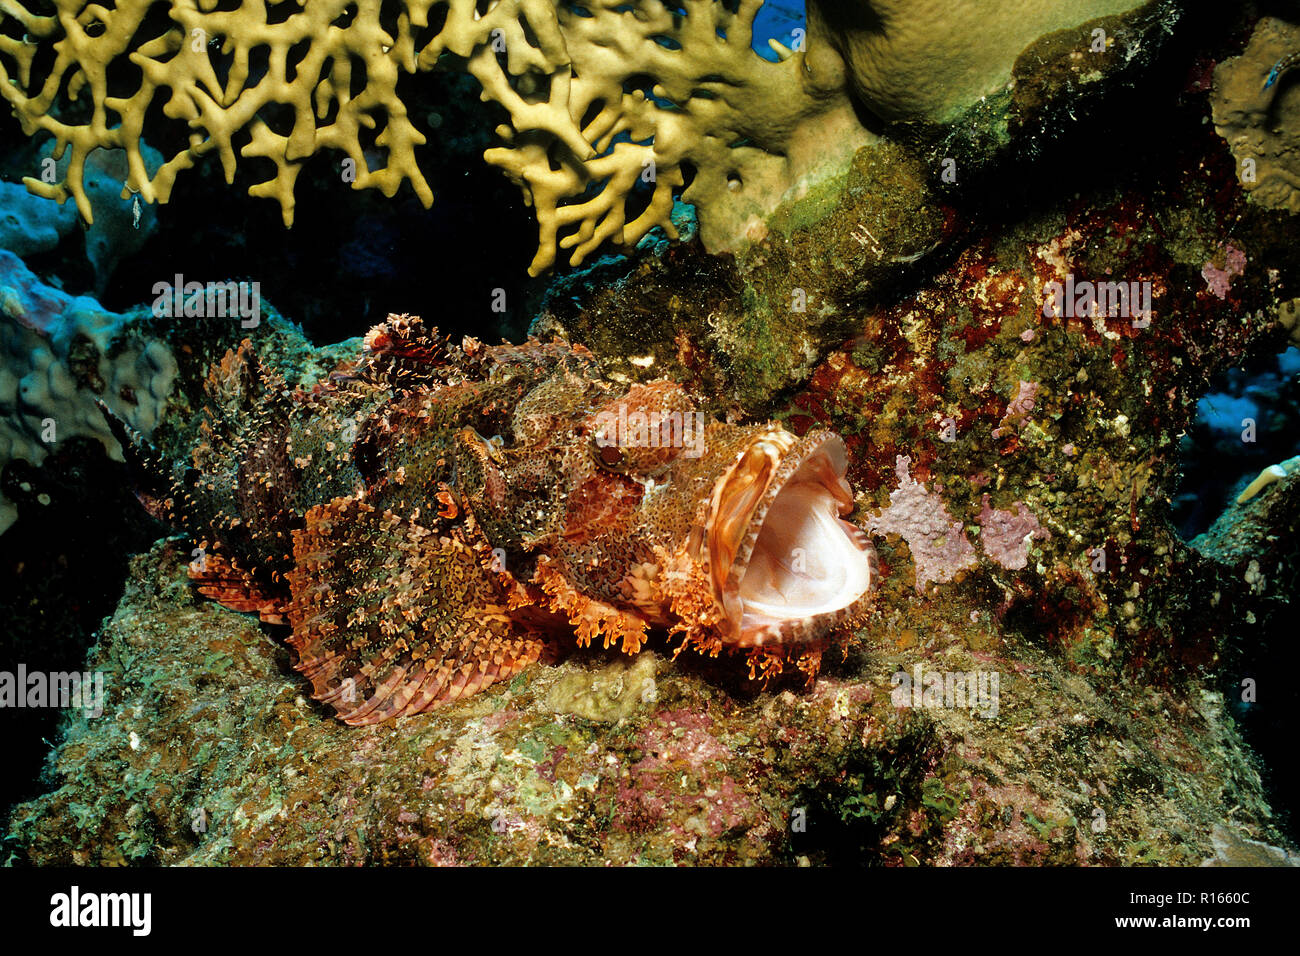 Tassled scorpionfish (Scorpaenopsis oxycephala), bouche ouverte, Hurghada, Egypte Banque D'Images